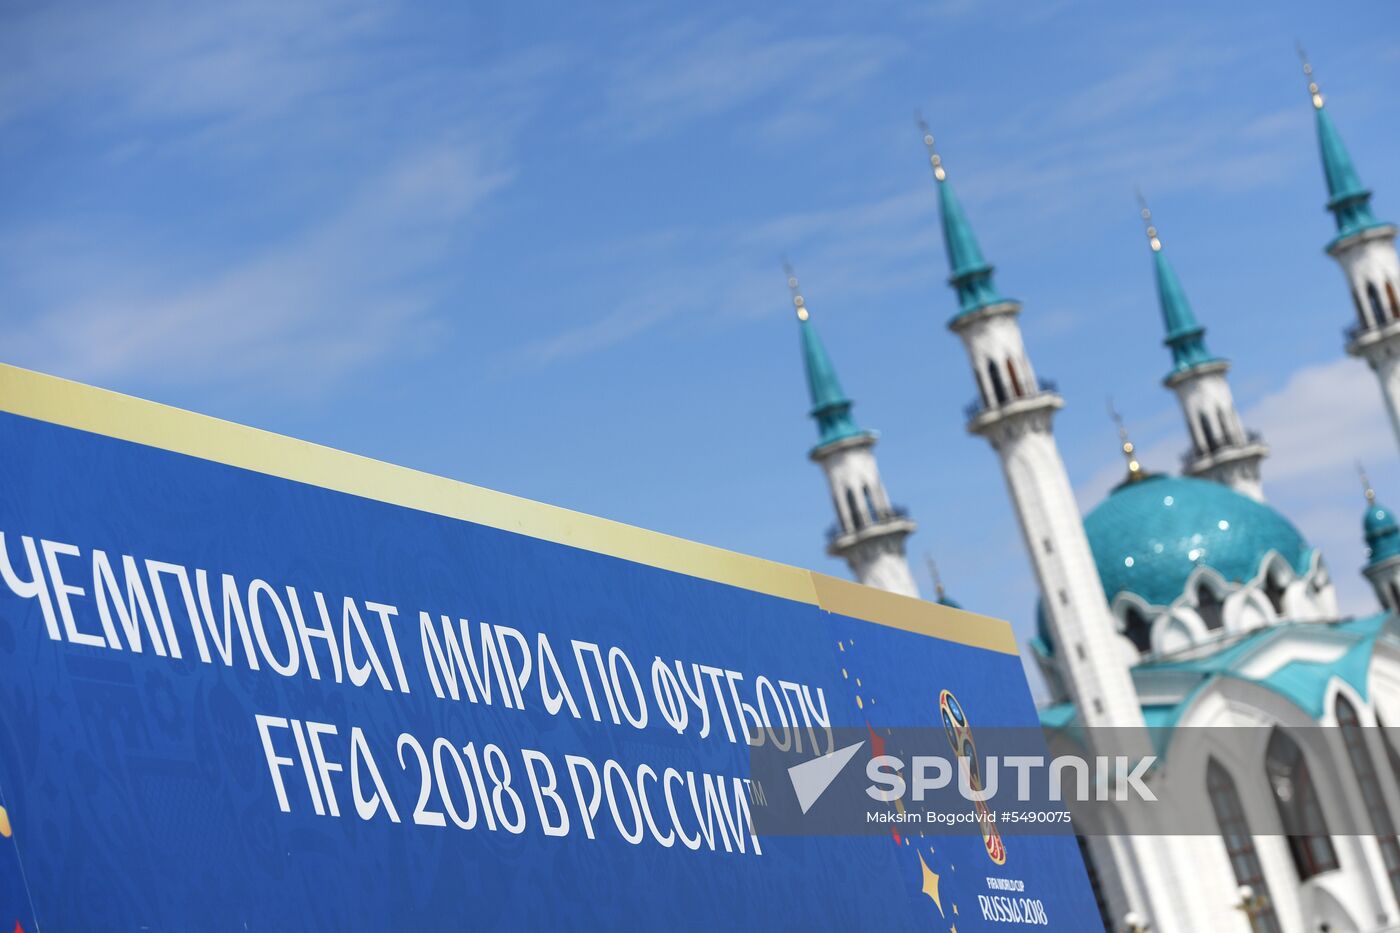 2018 FIFA  World Cup football park in Kazan